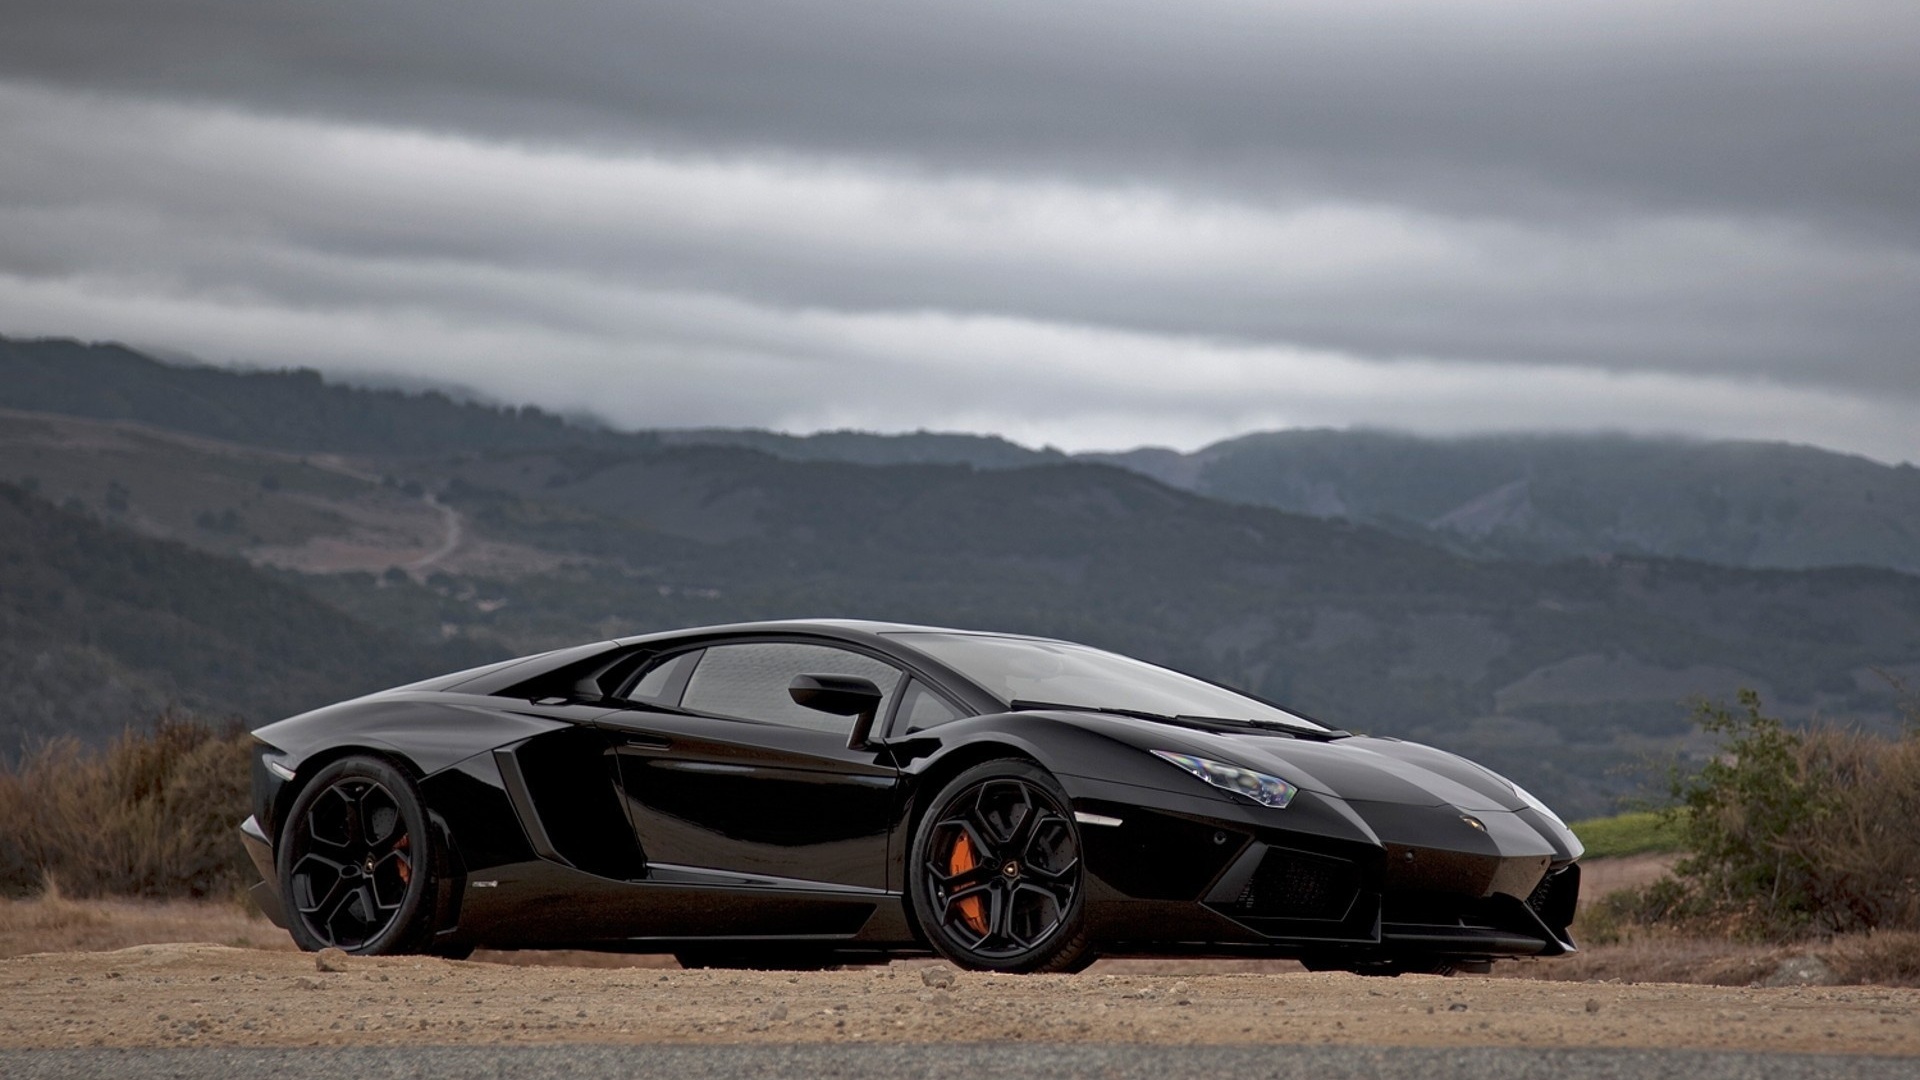 44+] Lamborghini HD Wallpapers 1080p on